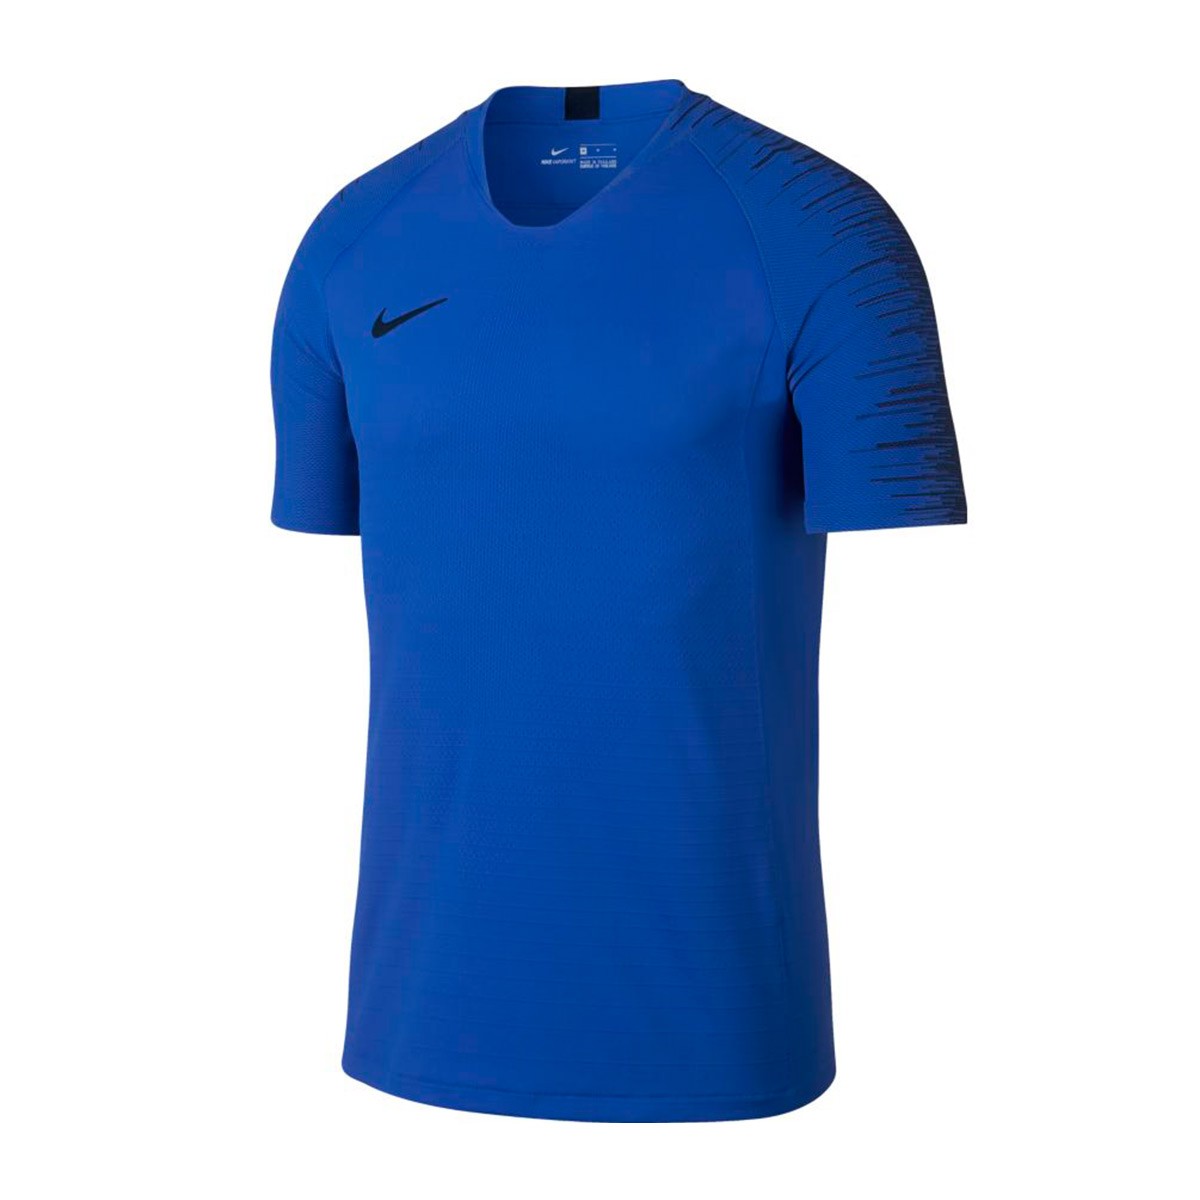 Camiseta Nike VaporKnit Strike Top Hyper royal-Blackened blue - Tienda de  fútbol Fútbol Emotion